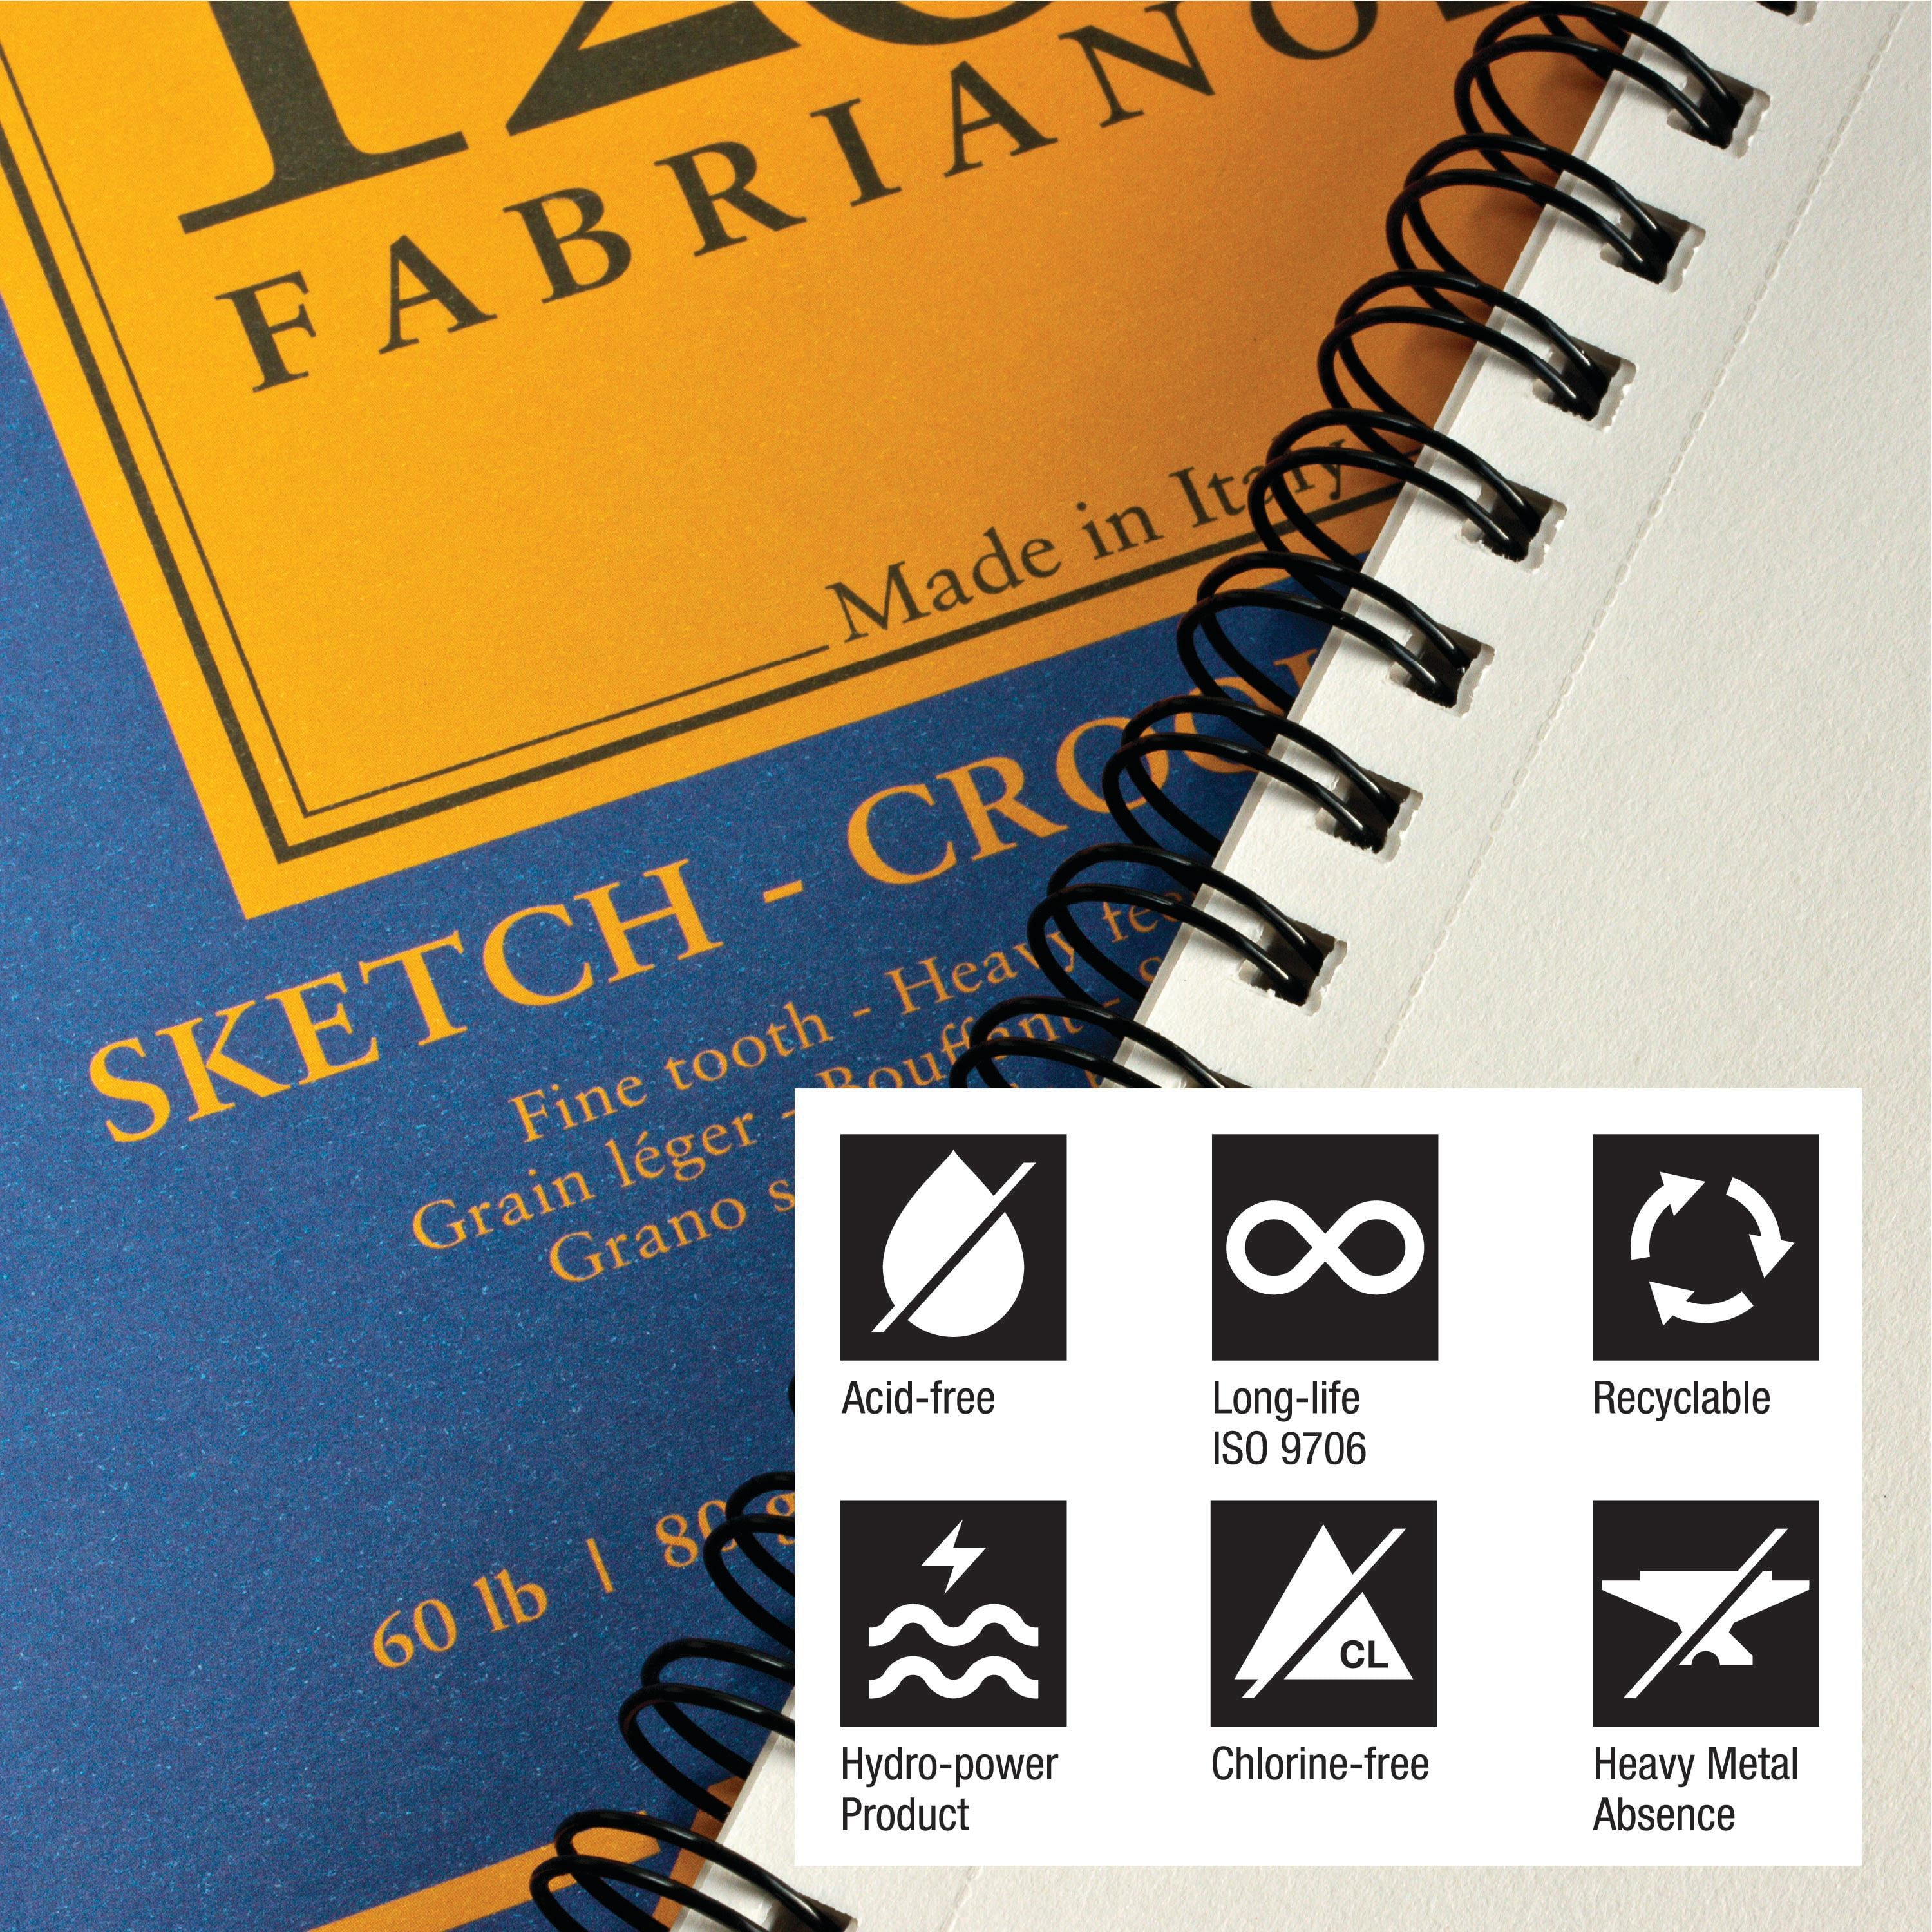  Fabriano 1264 Sketch Pad, 3.5 x 5, Light Cream : Arts